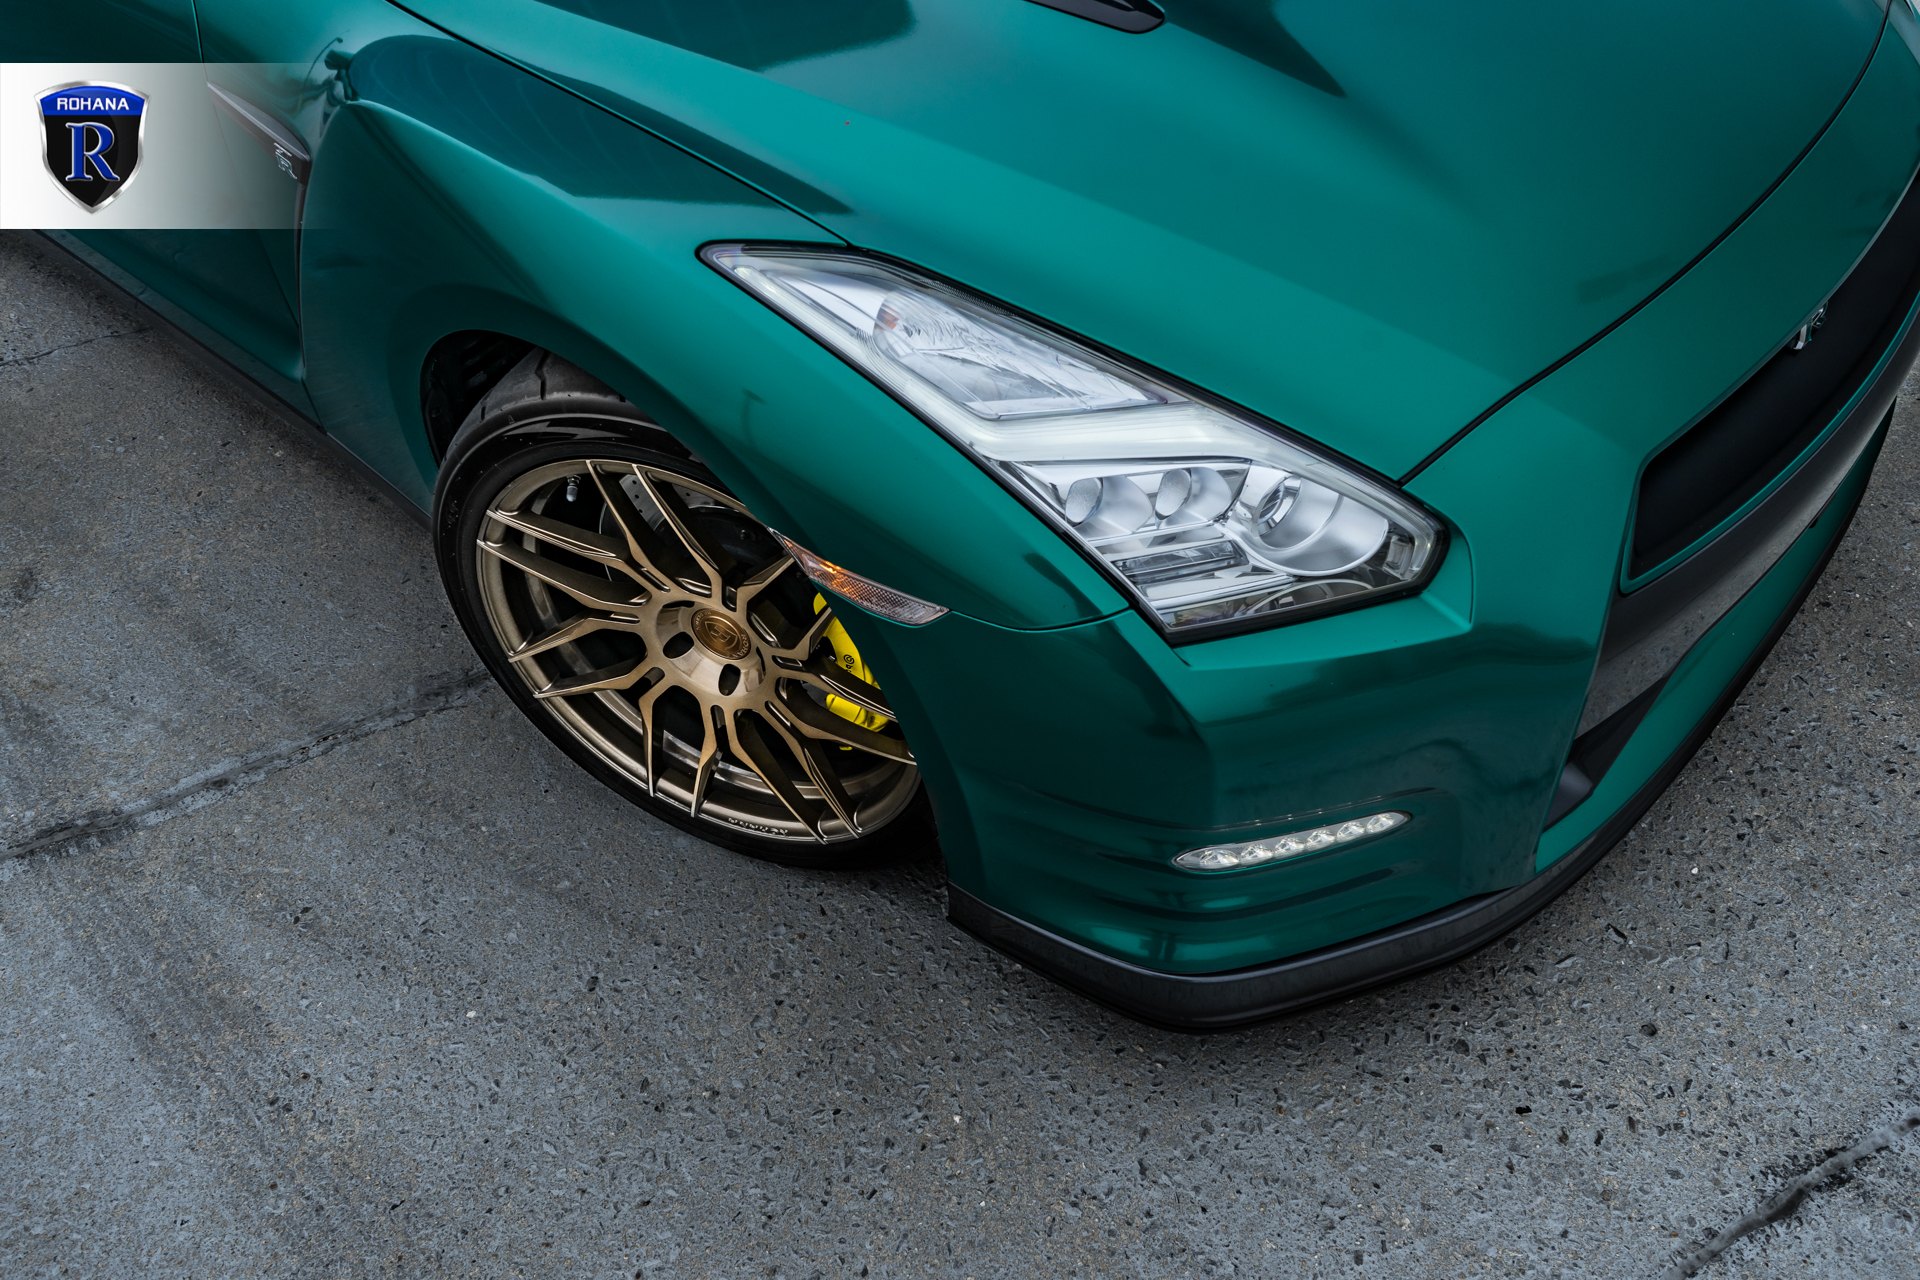 Bronze Rohana Rims with Brembo Brakes on Green Nissan GT-R - Photo by Rohana Wheels